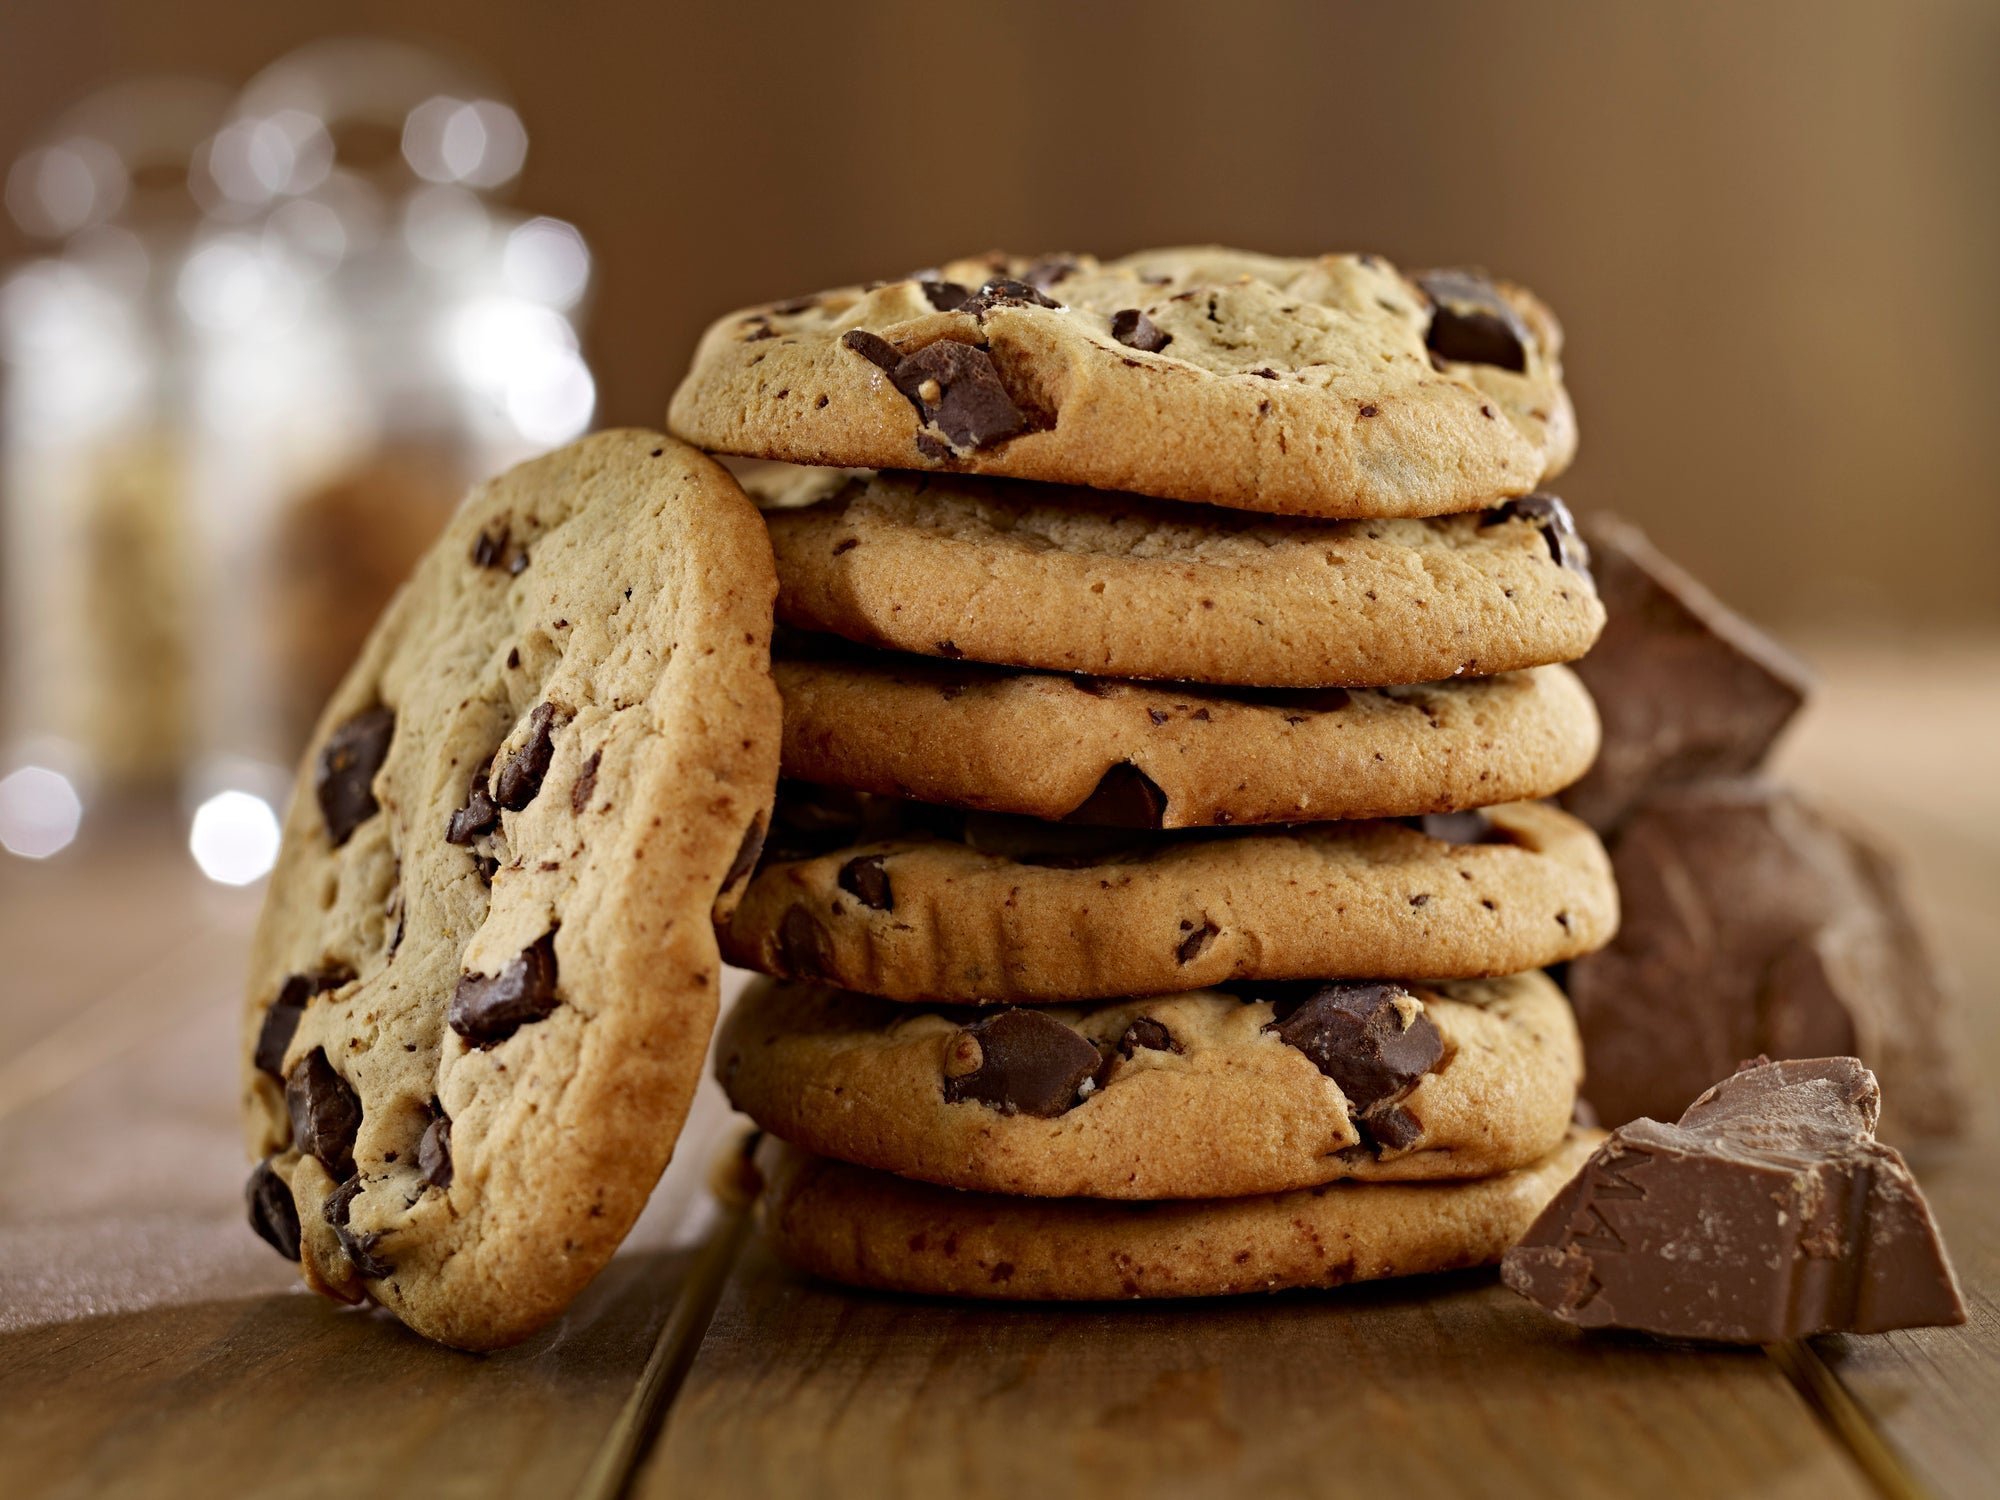 Change cookie. Печенье Американ кукис. Американское шоколадное печенье кукис. Печенье Chocolate Chip cookies. Печенье с шоколадной крошкой.